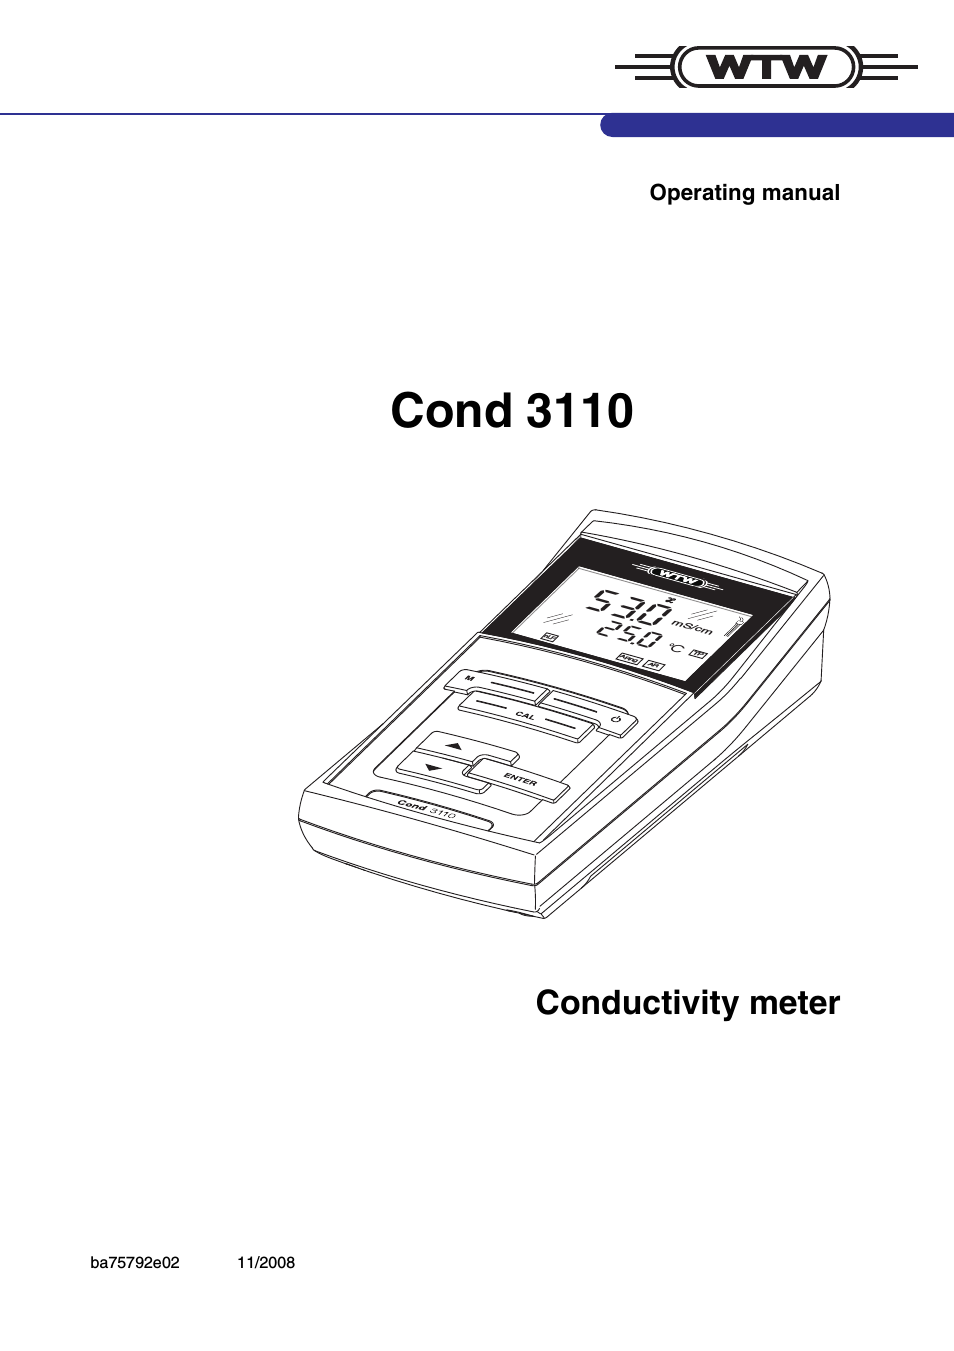 COND3110 HANDHELD CONDUCTIVITY METERS